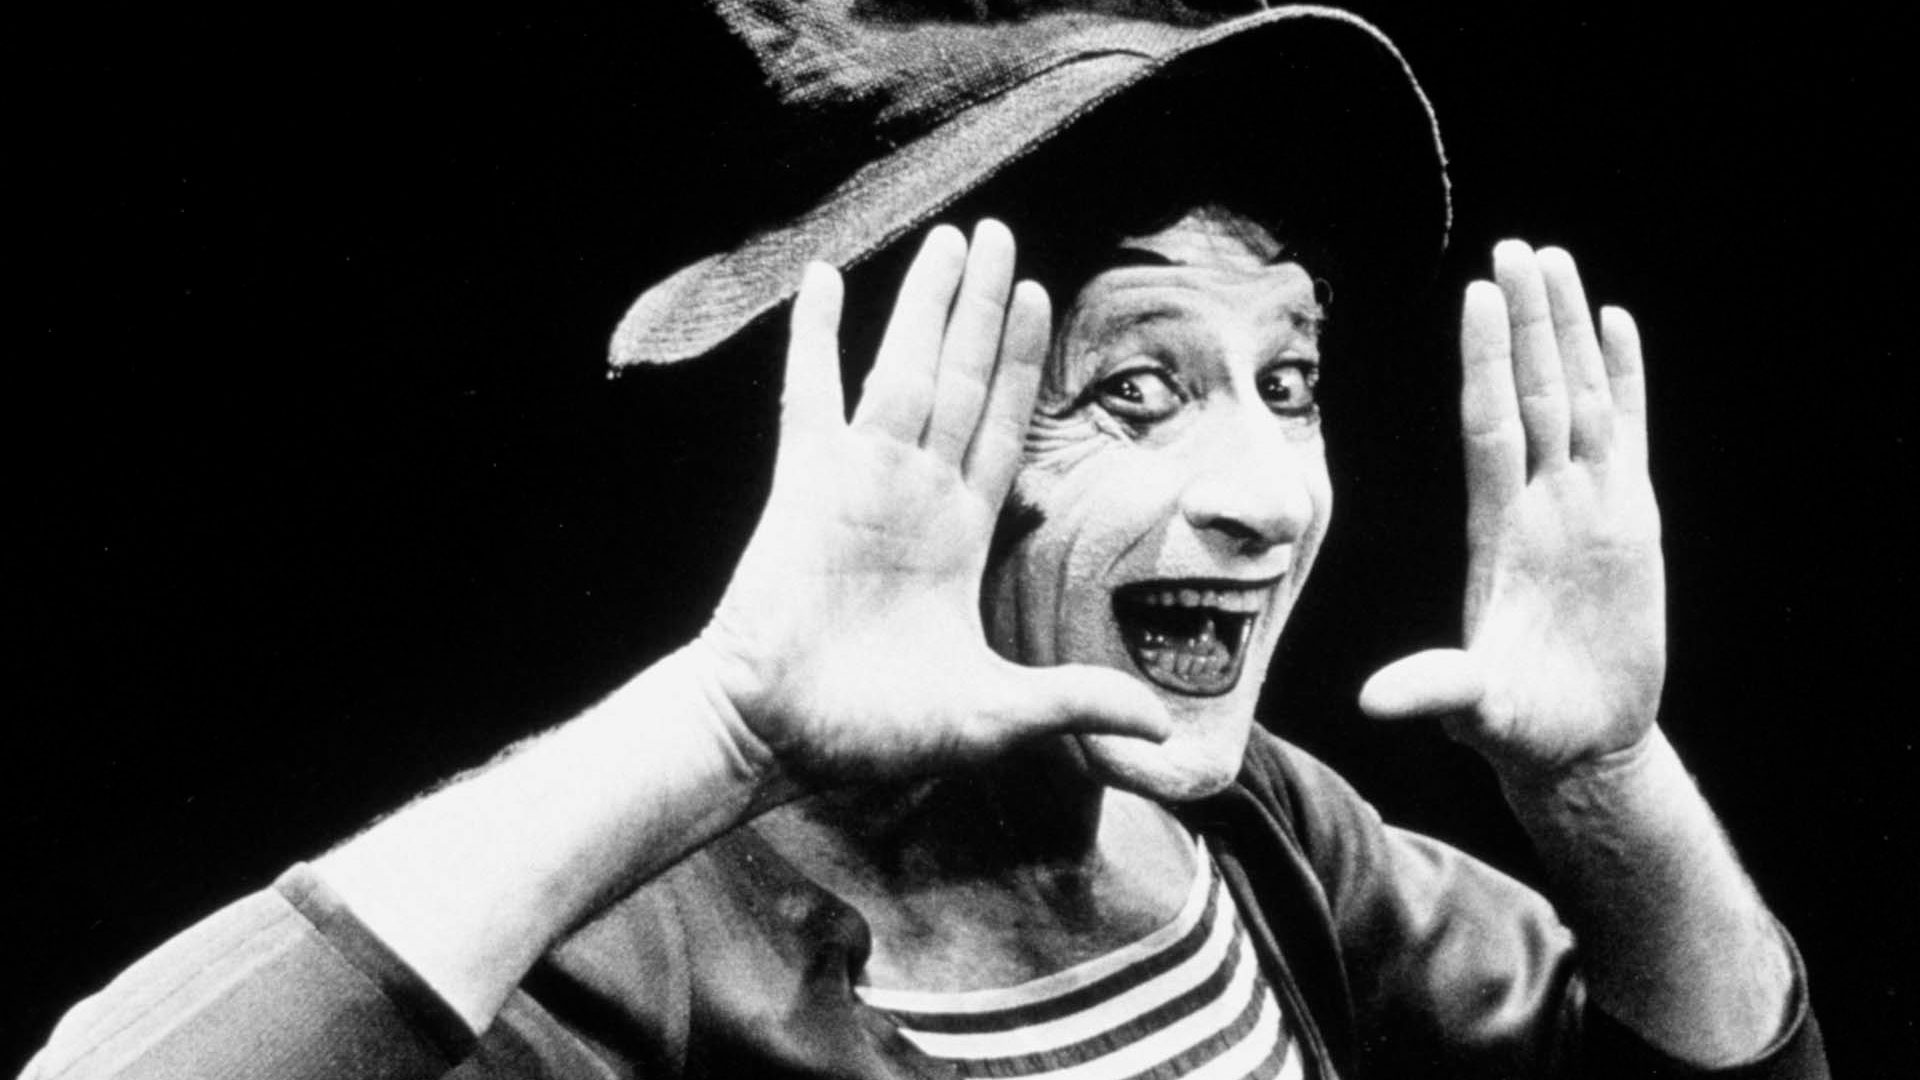 Marcel Marceau: Winner of Primetime Emmy Award for Best Specialty Act - Single or Group in 1958, Bip the Clown. 1920x1080 Full HD Wallpaper.